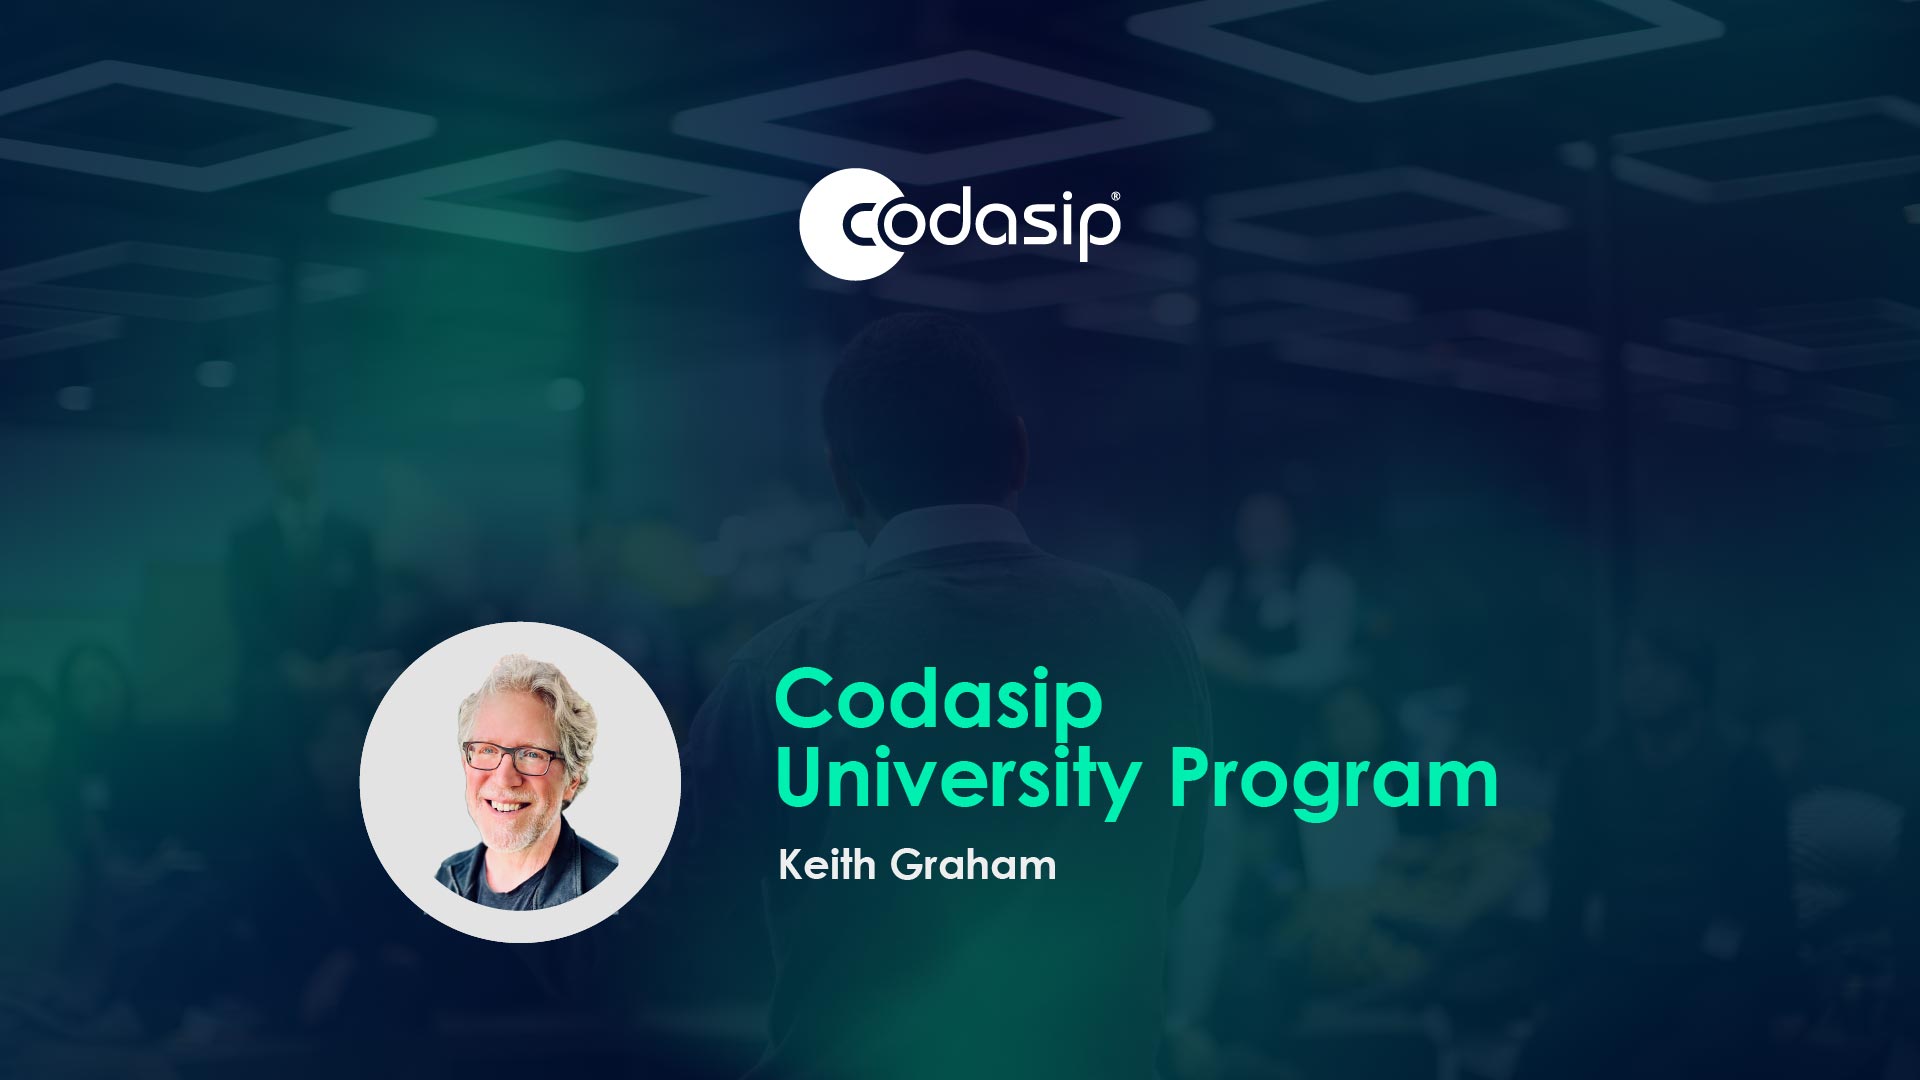 Codasip University Program with Keith Graham